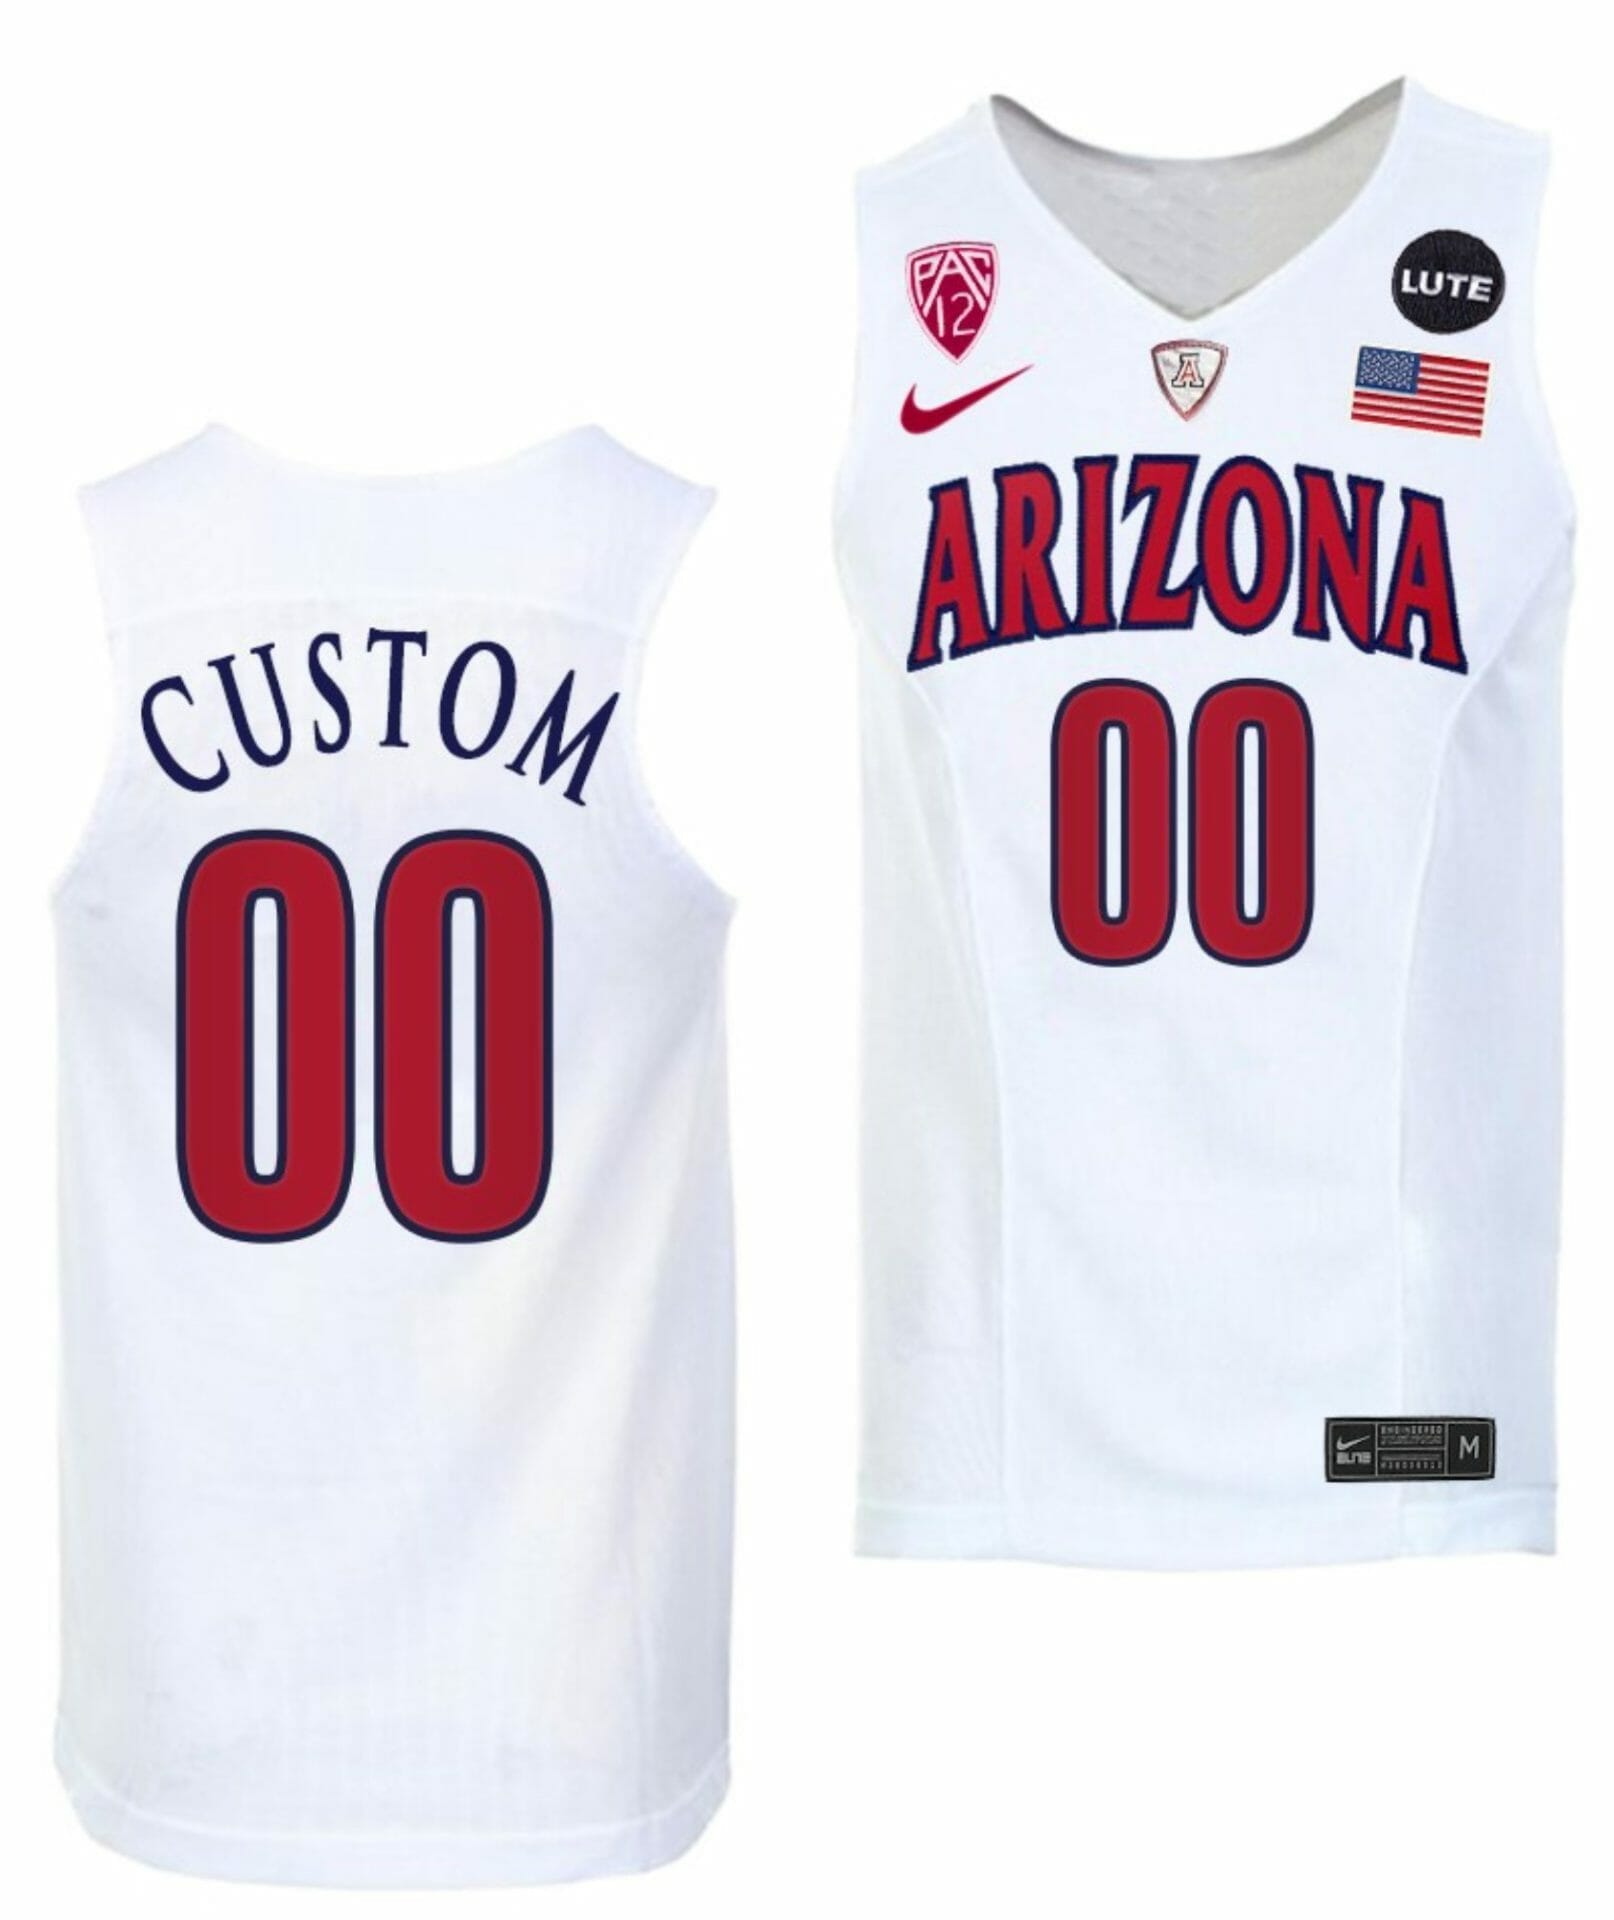 Arizona Jerseys, Arizona Wildcats Uniforms